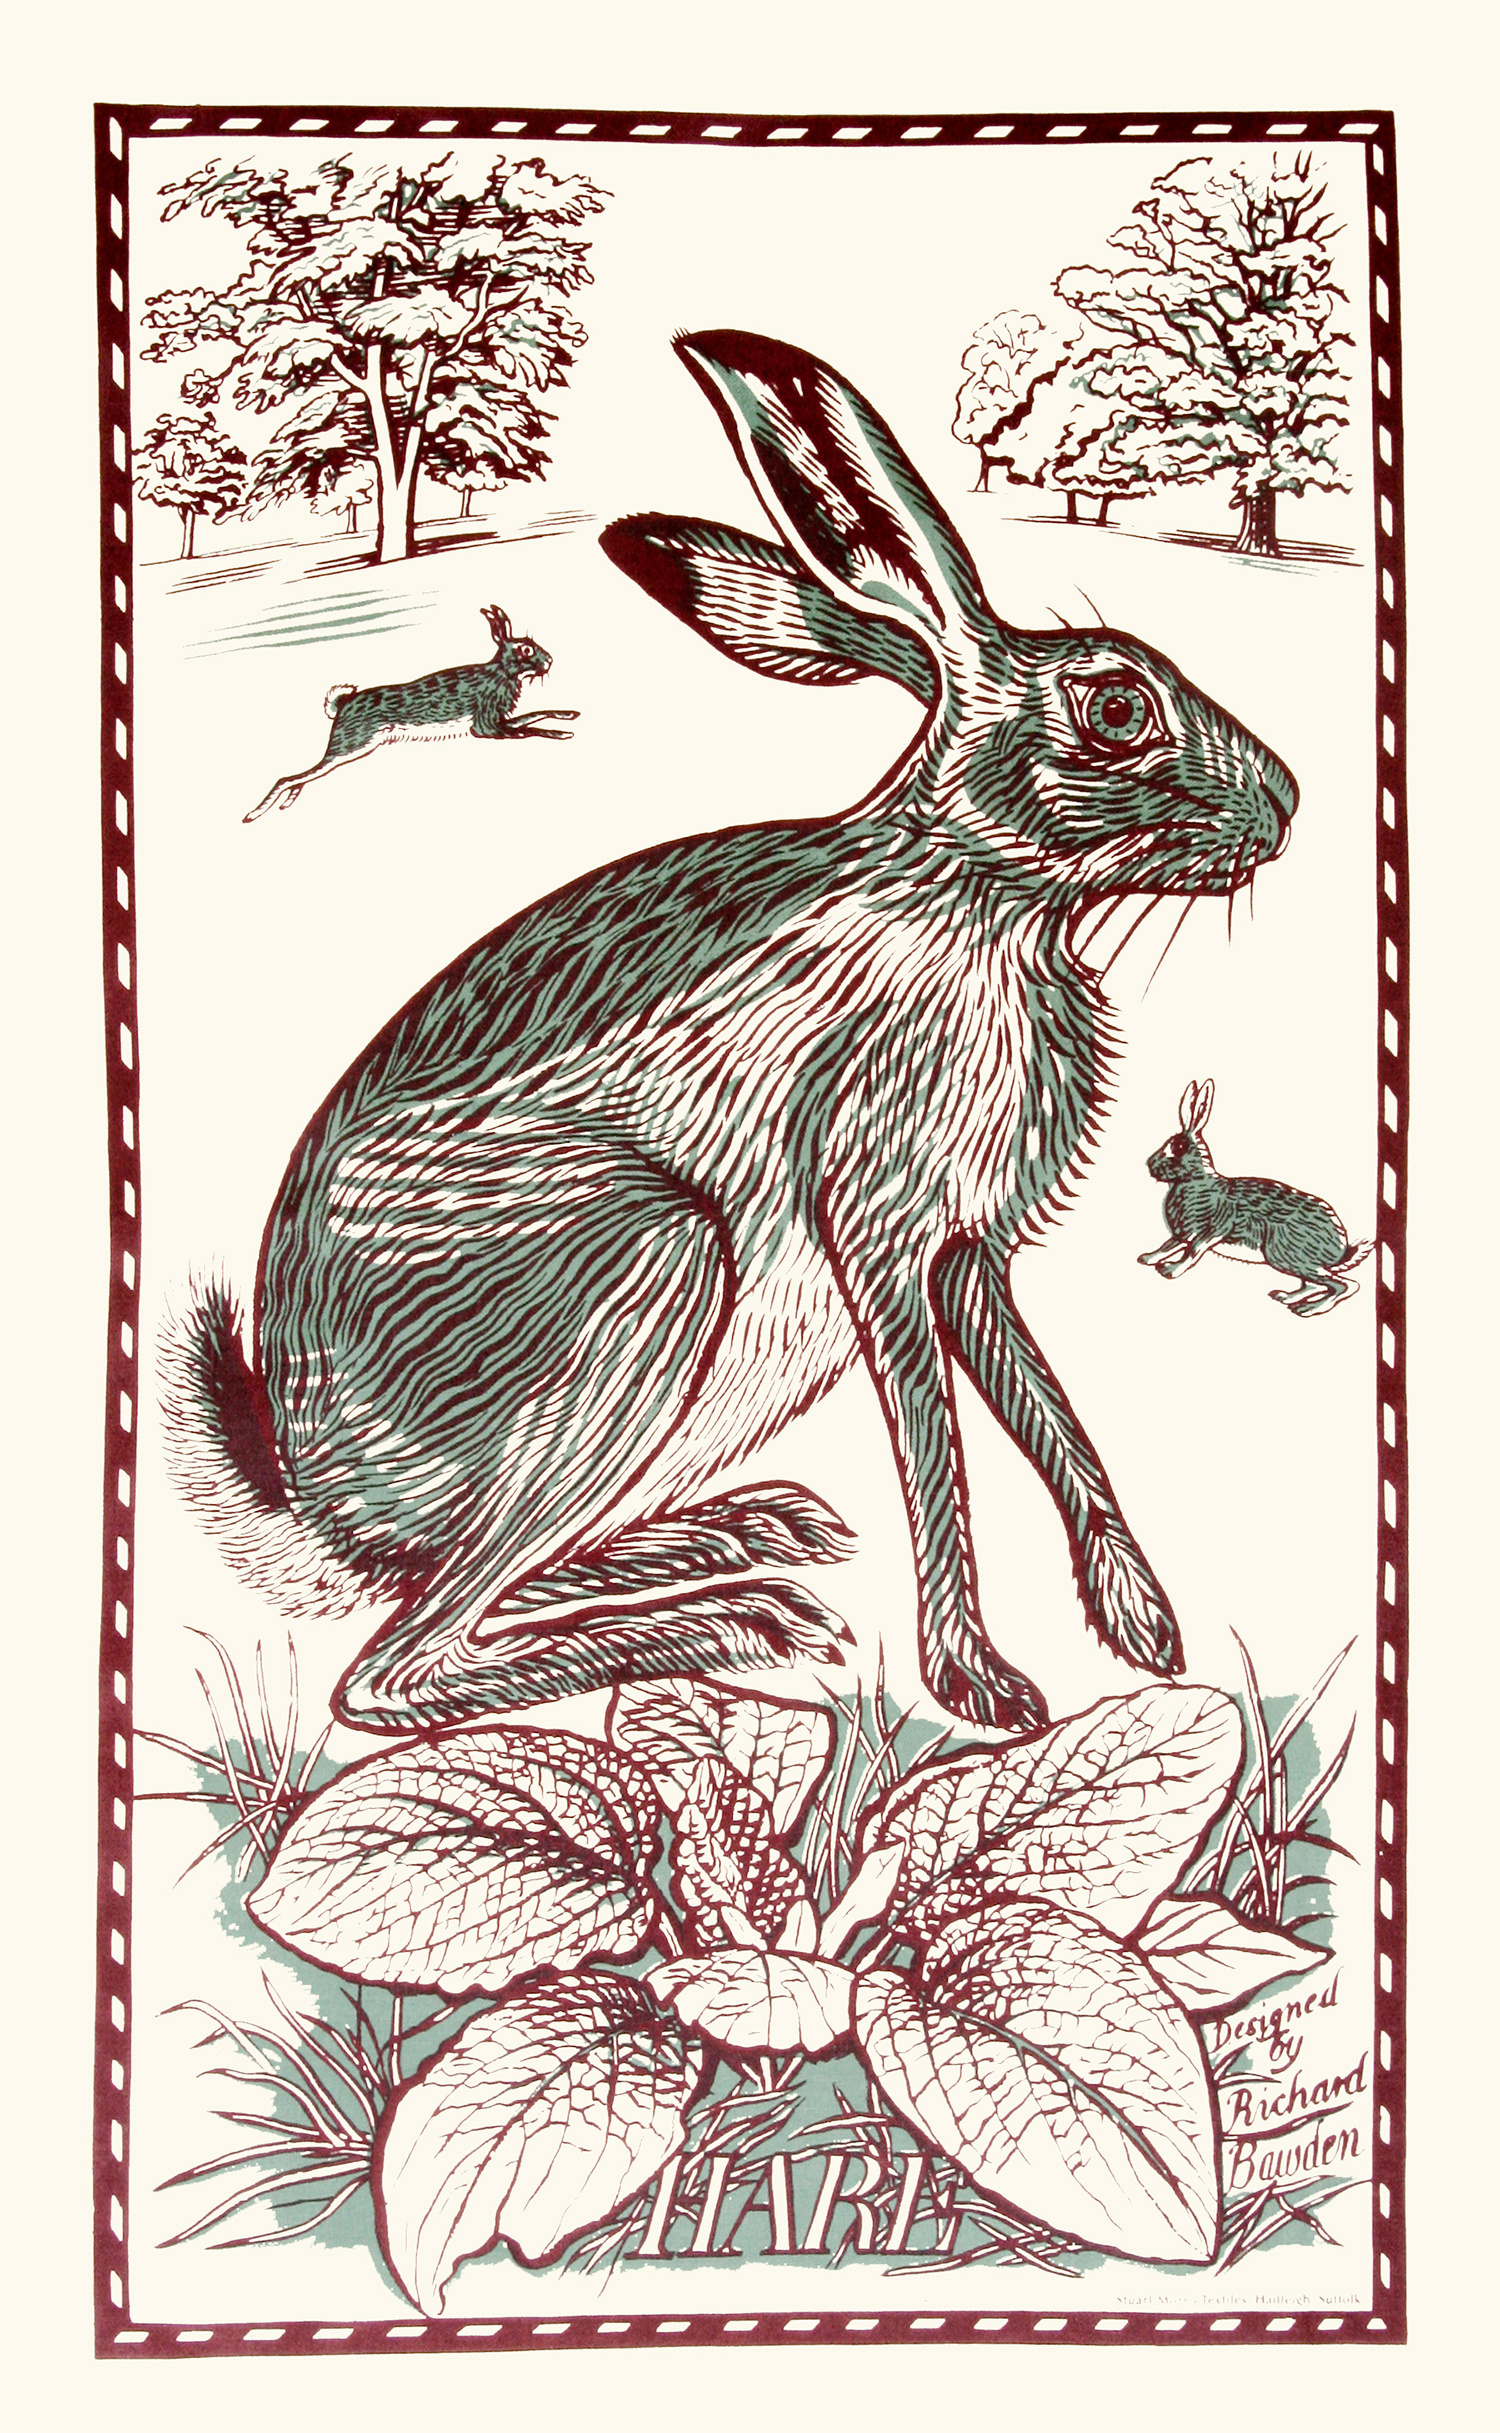 Tea Towel Hare by Richard Bawden